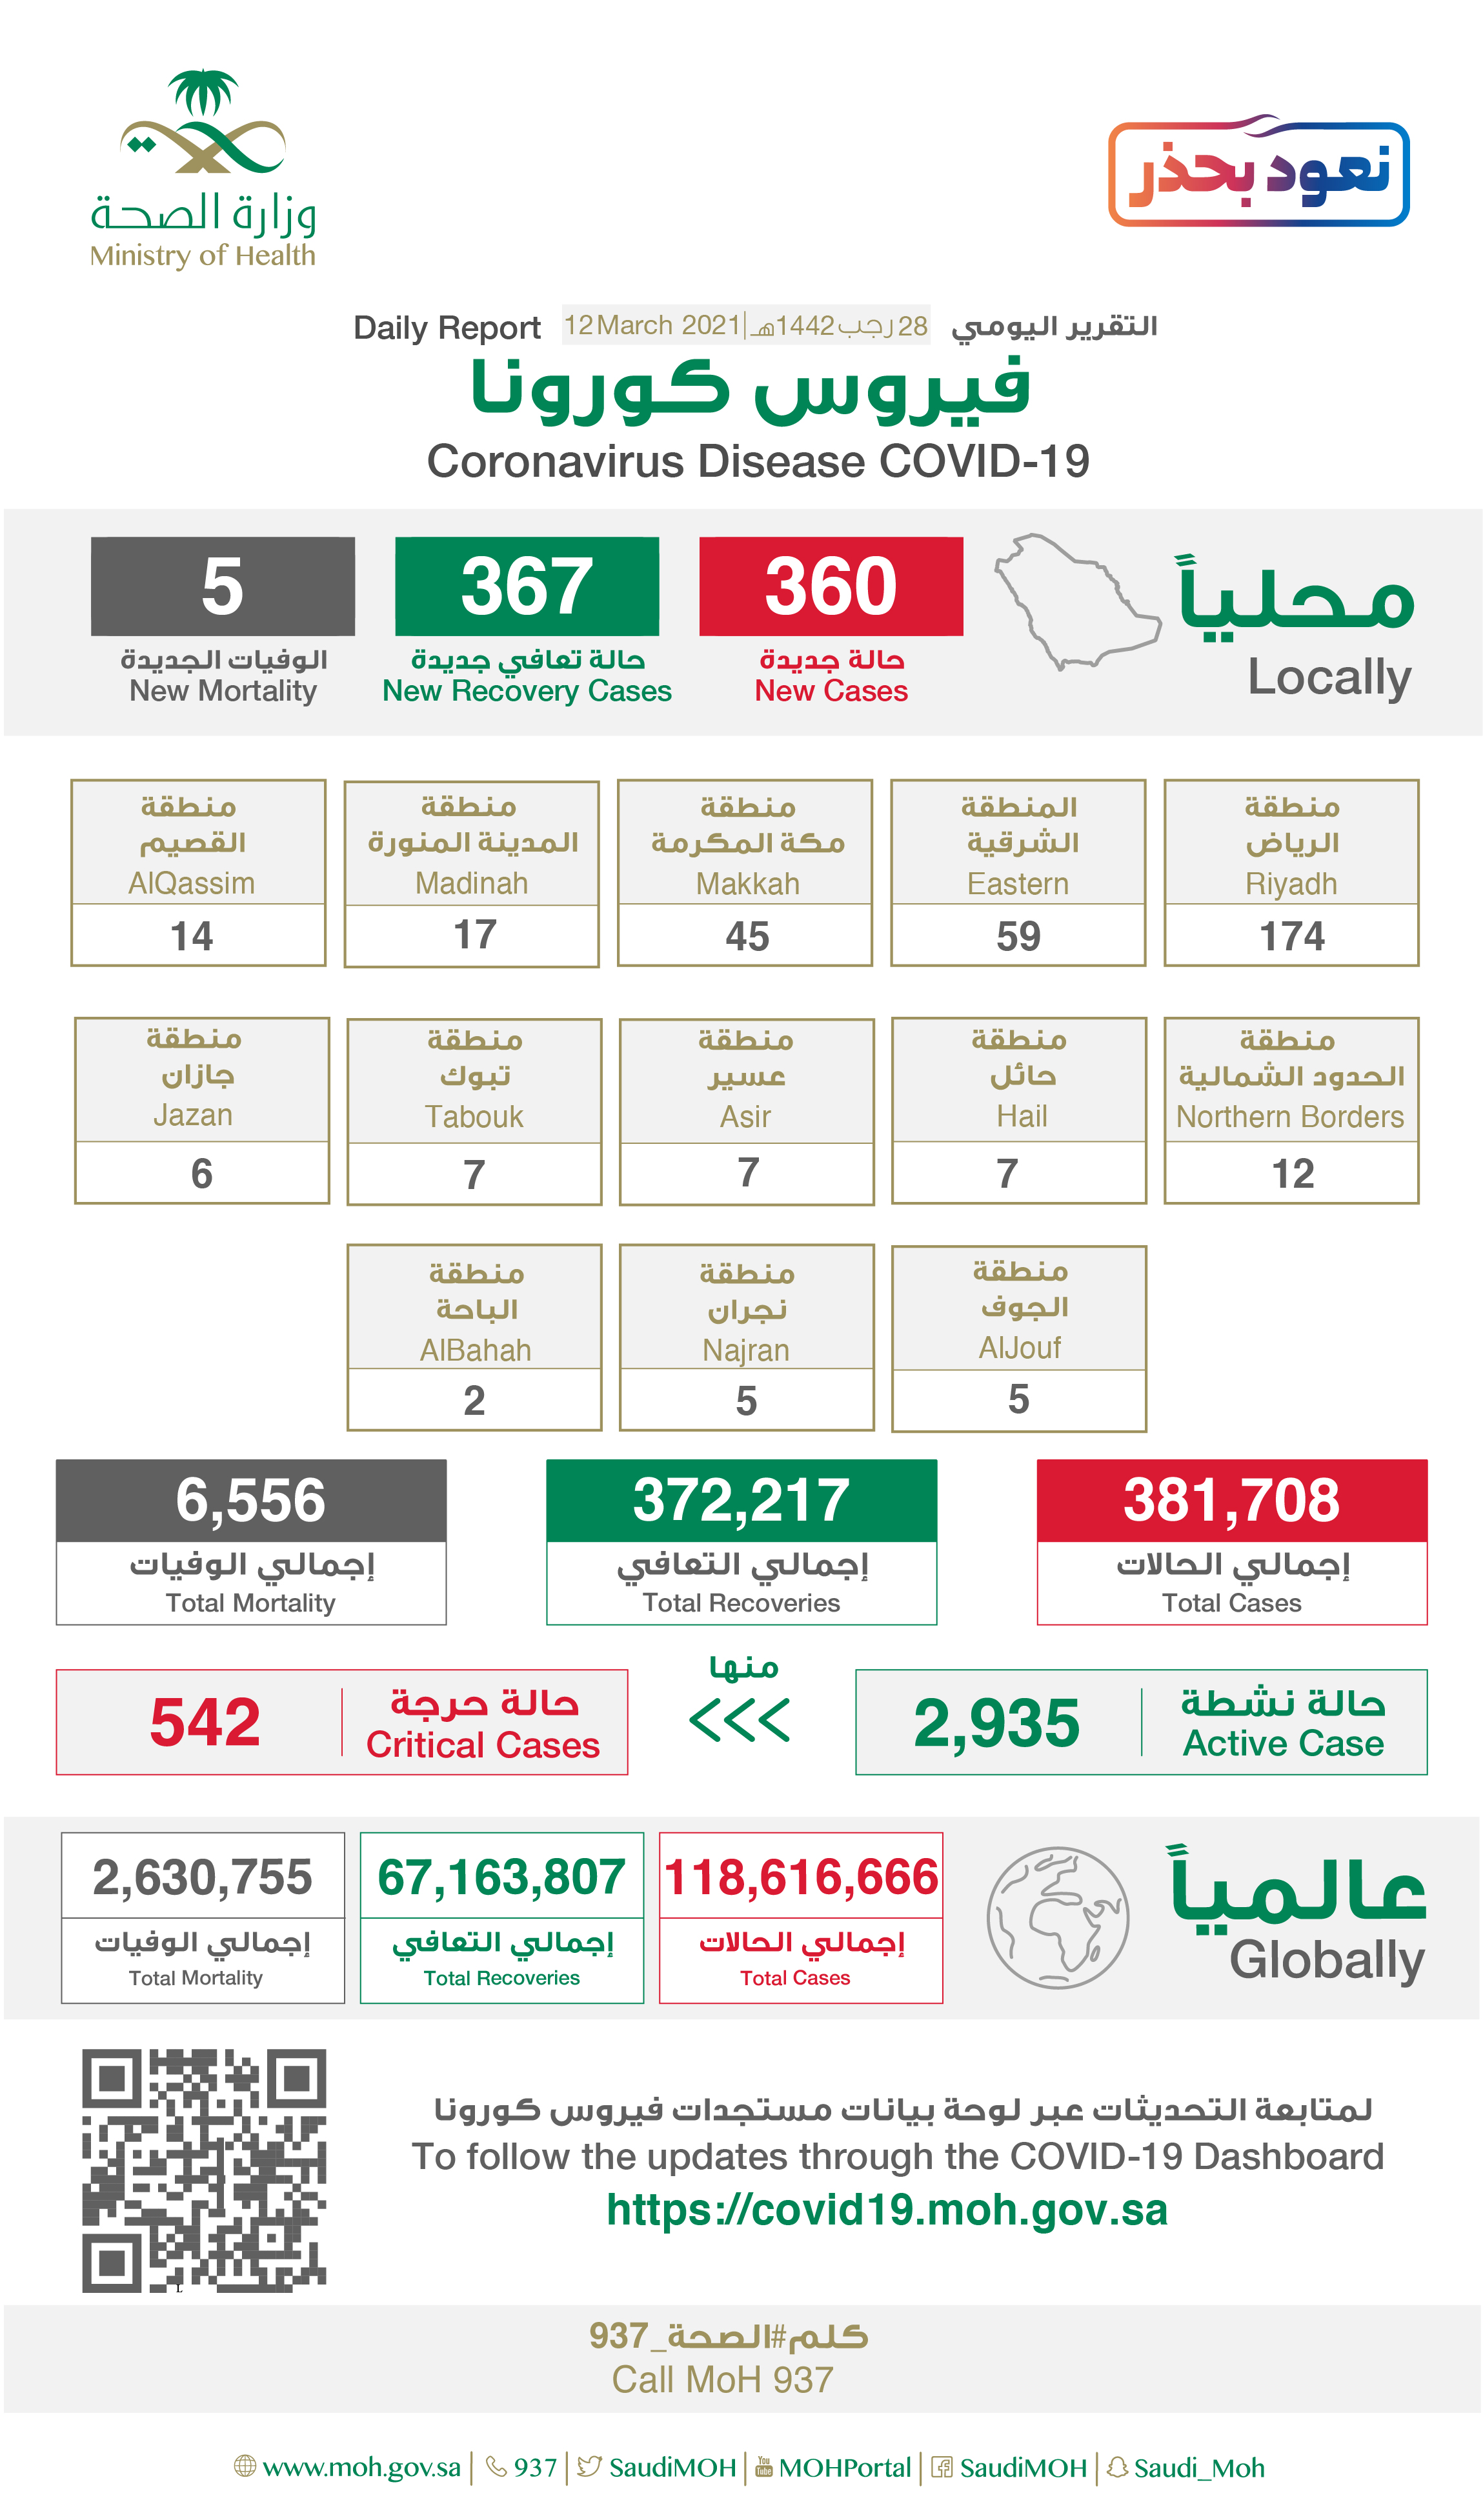 Saudi Arabia Coronavirus : Total Cases :381,708 , New Cases : 360, Cured : 372,217, Deaths: 6,556, Active Cases : 2,935